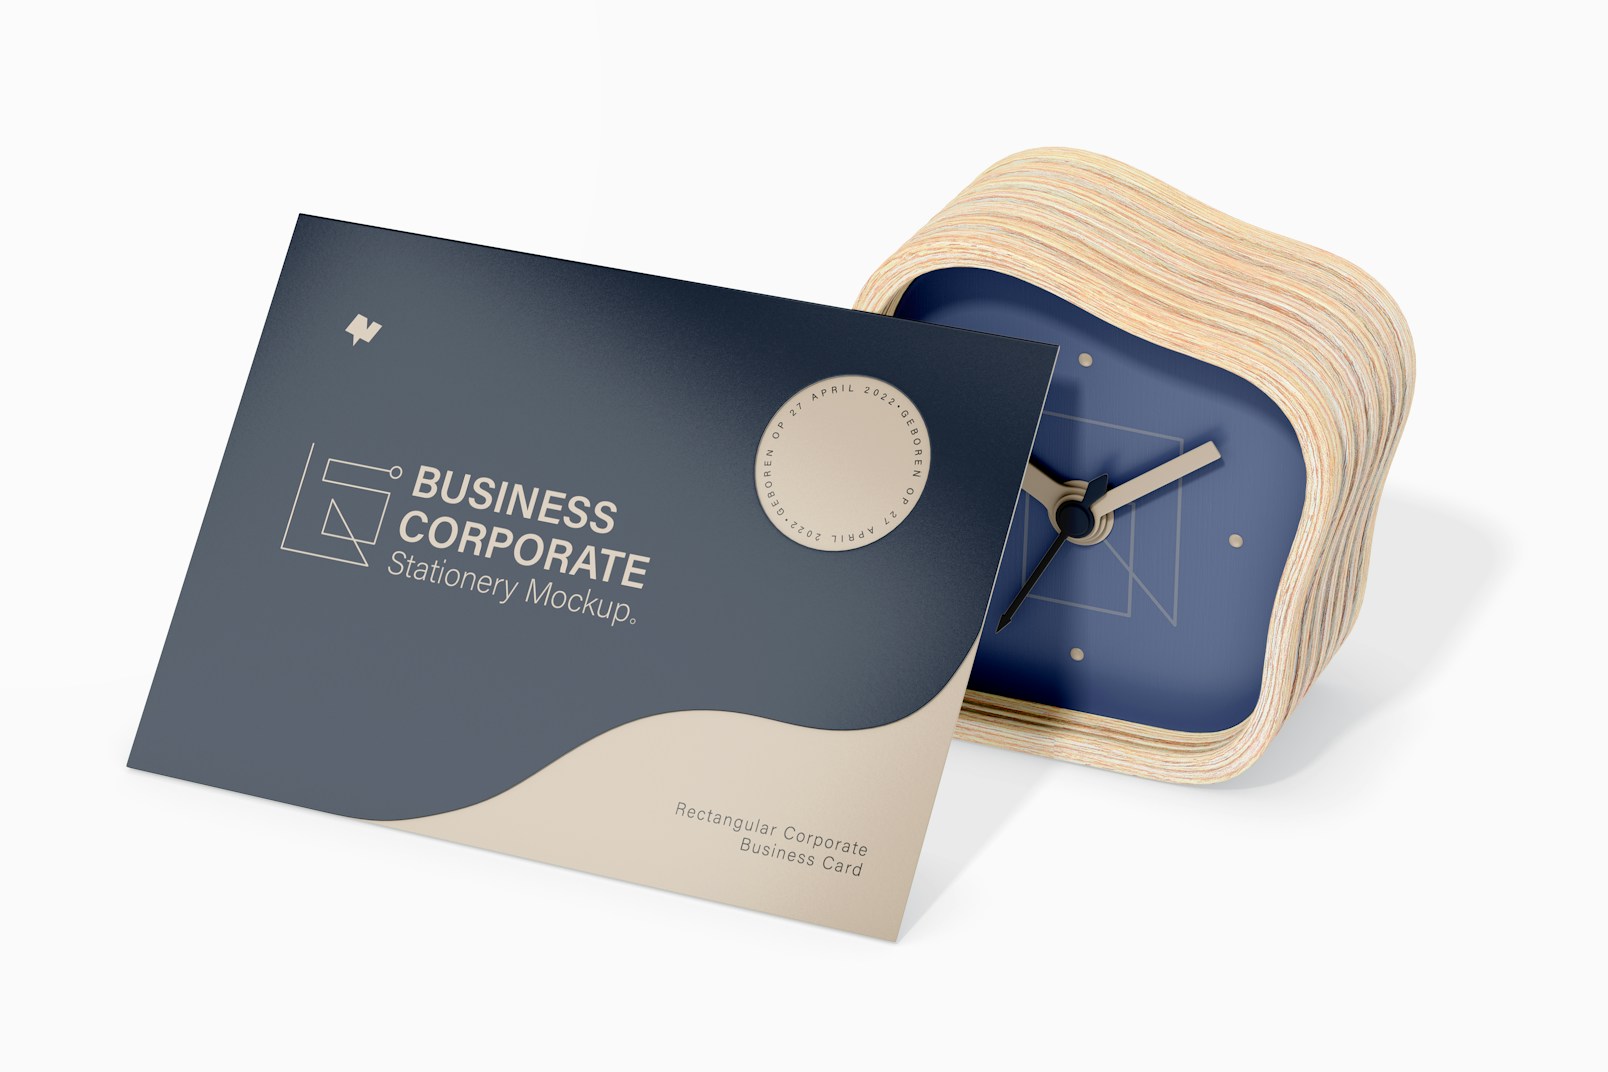 Rectangular Corporate Business Card Mockup, Leaned